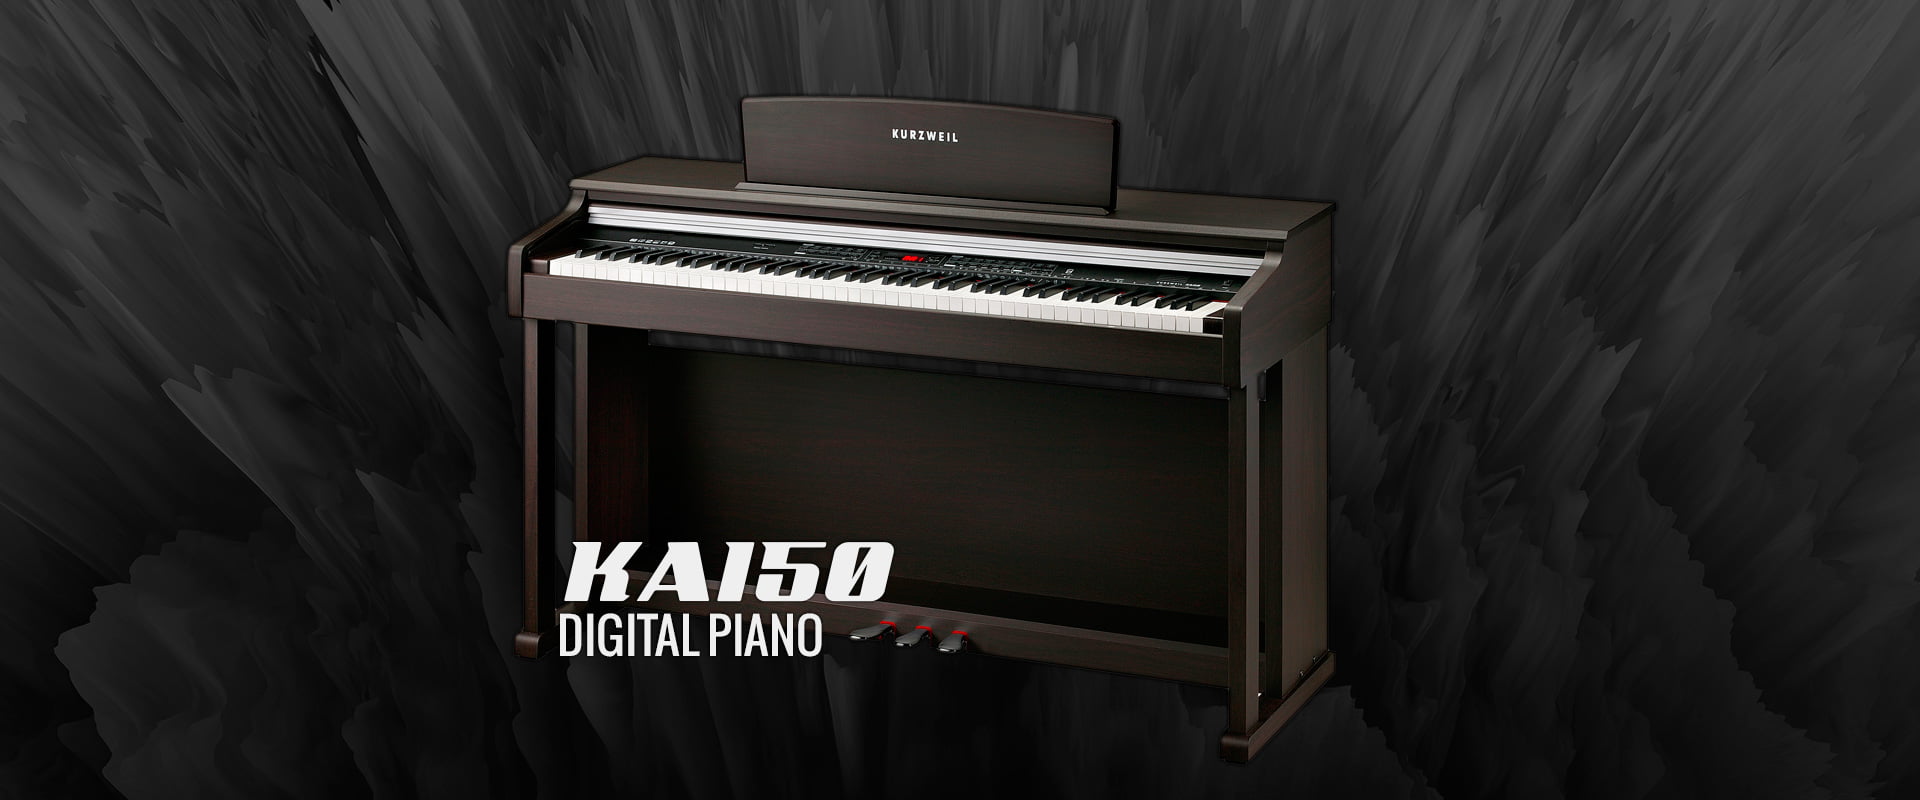 ویژگی های پیانو کورزویل KA150